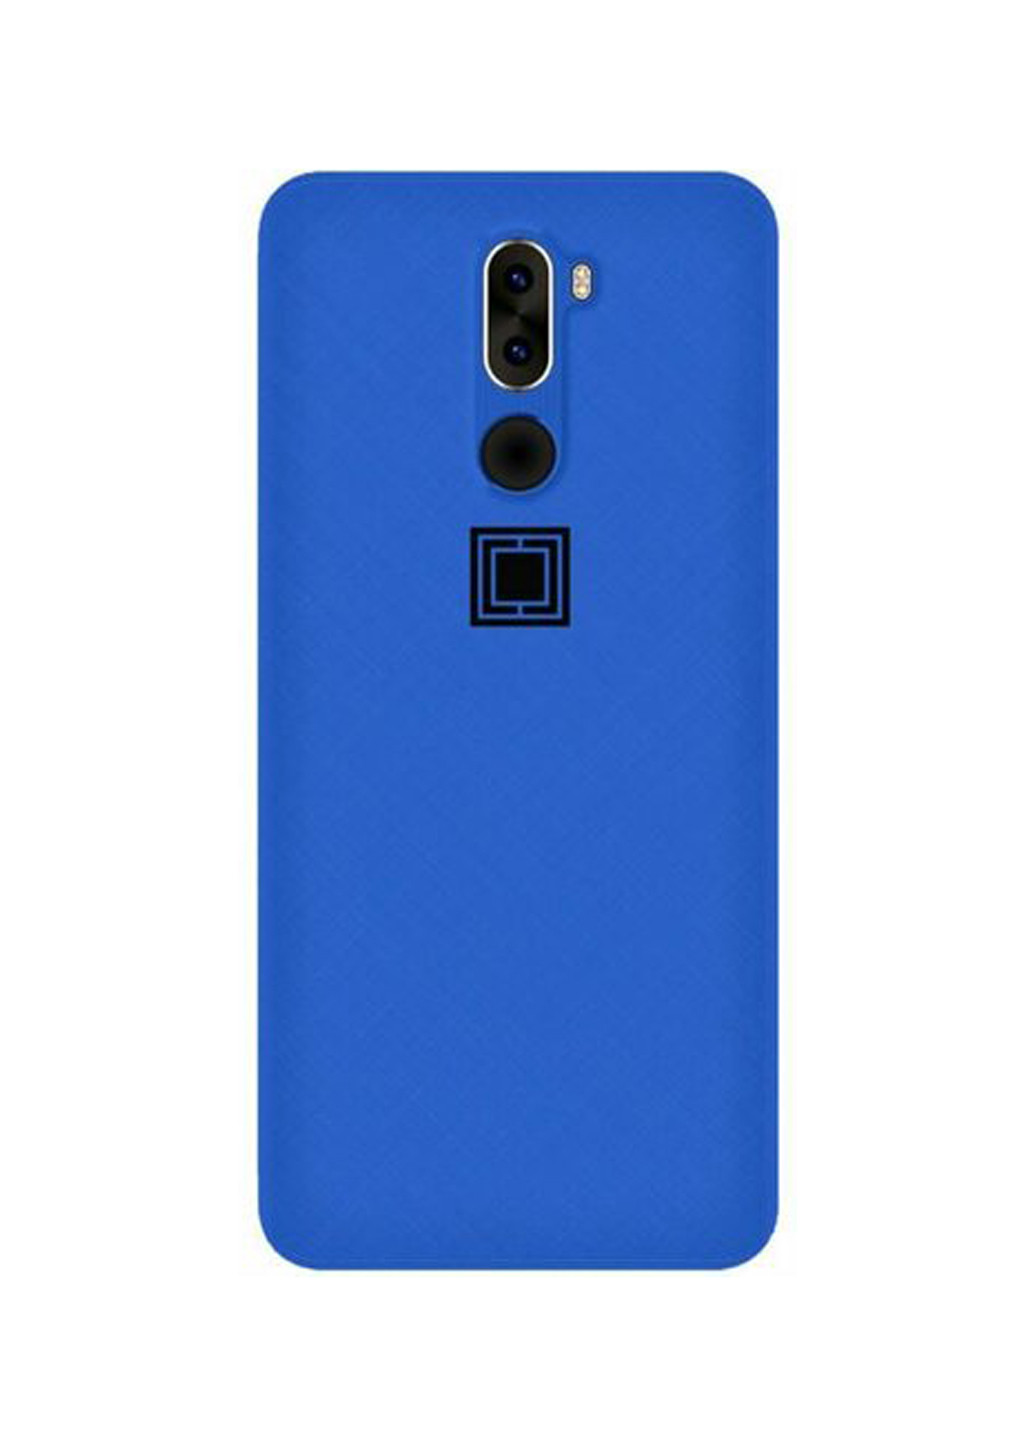 Смартфон AS-601L Pro 2 / 16GB Blue ASSISTANT as-601l pro 2/16gb blue (131804413)